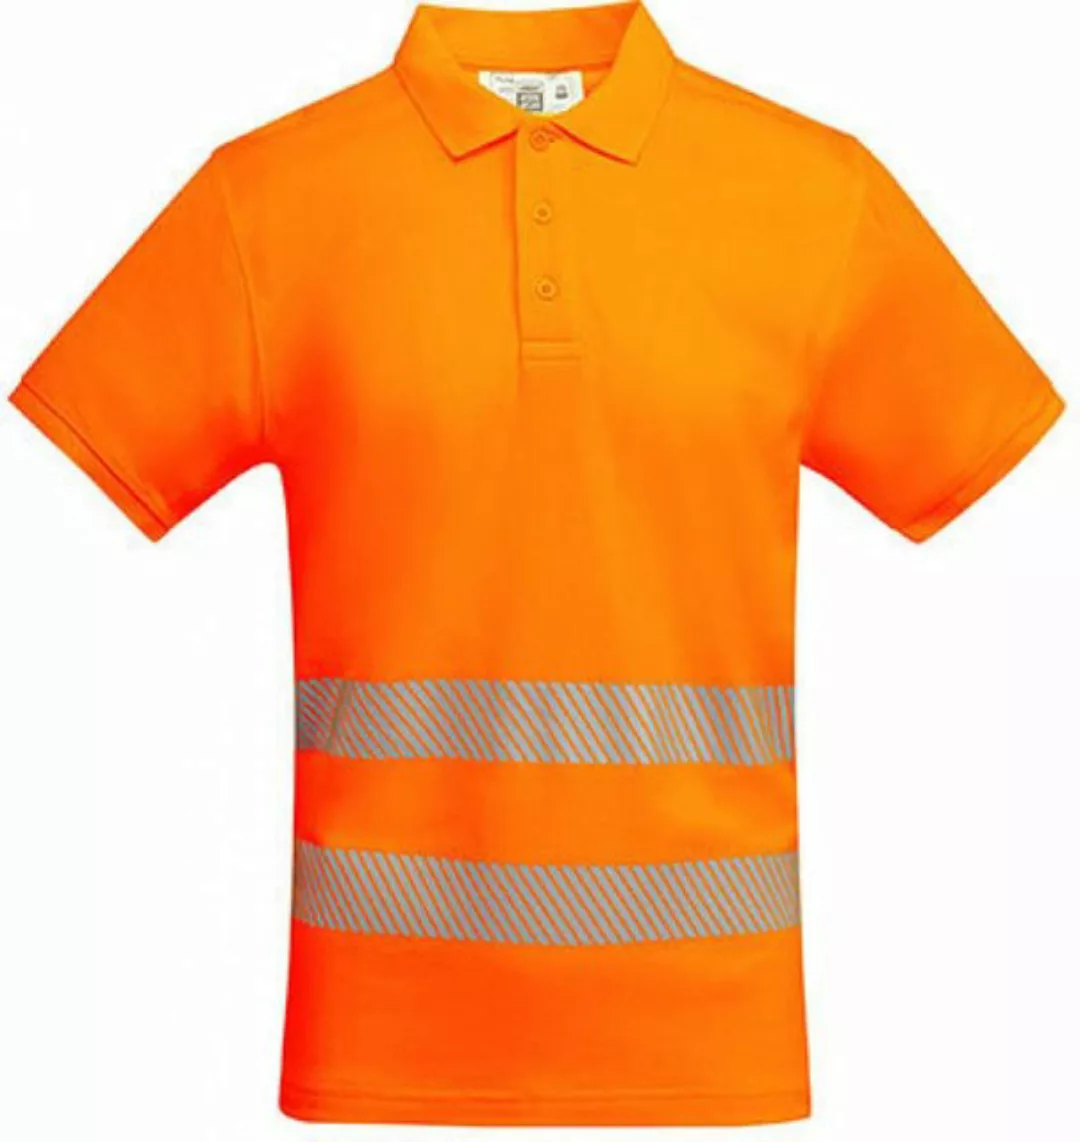 Roly Warnschutz-Shirt Poloshirt Atrio Shortsleeve Poloshirt Herren günstig online kaufen